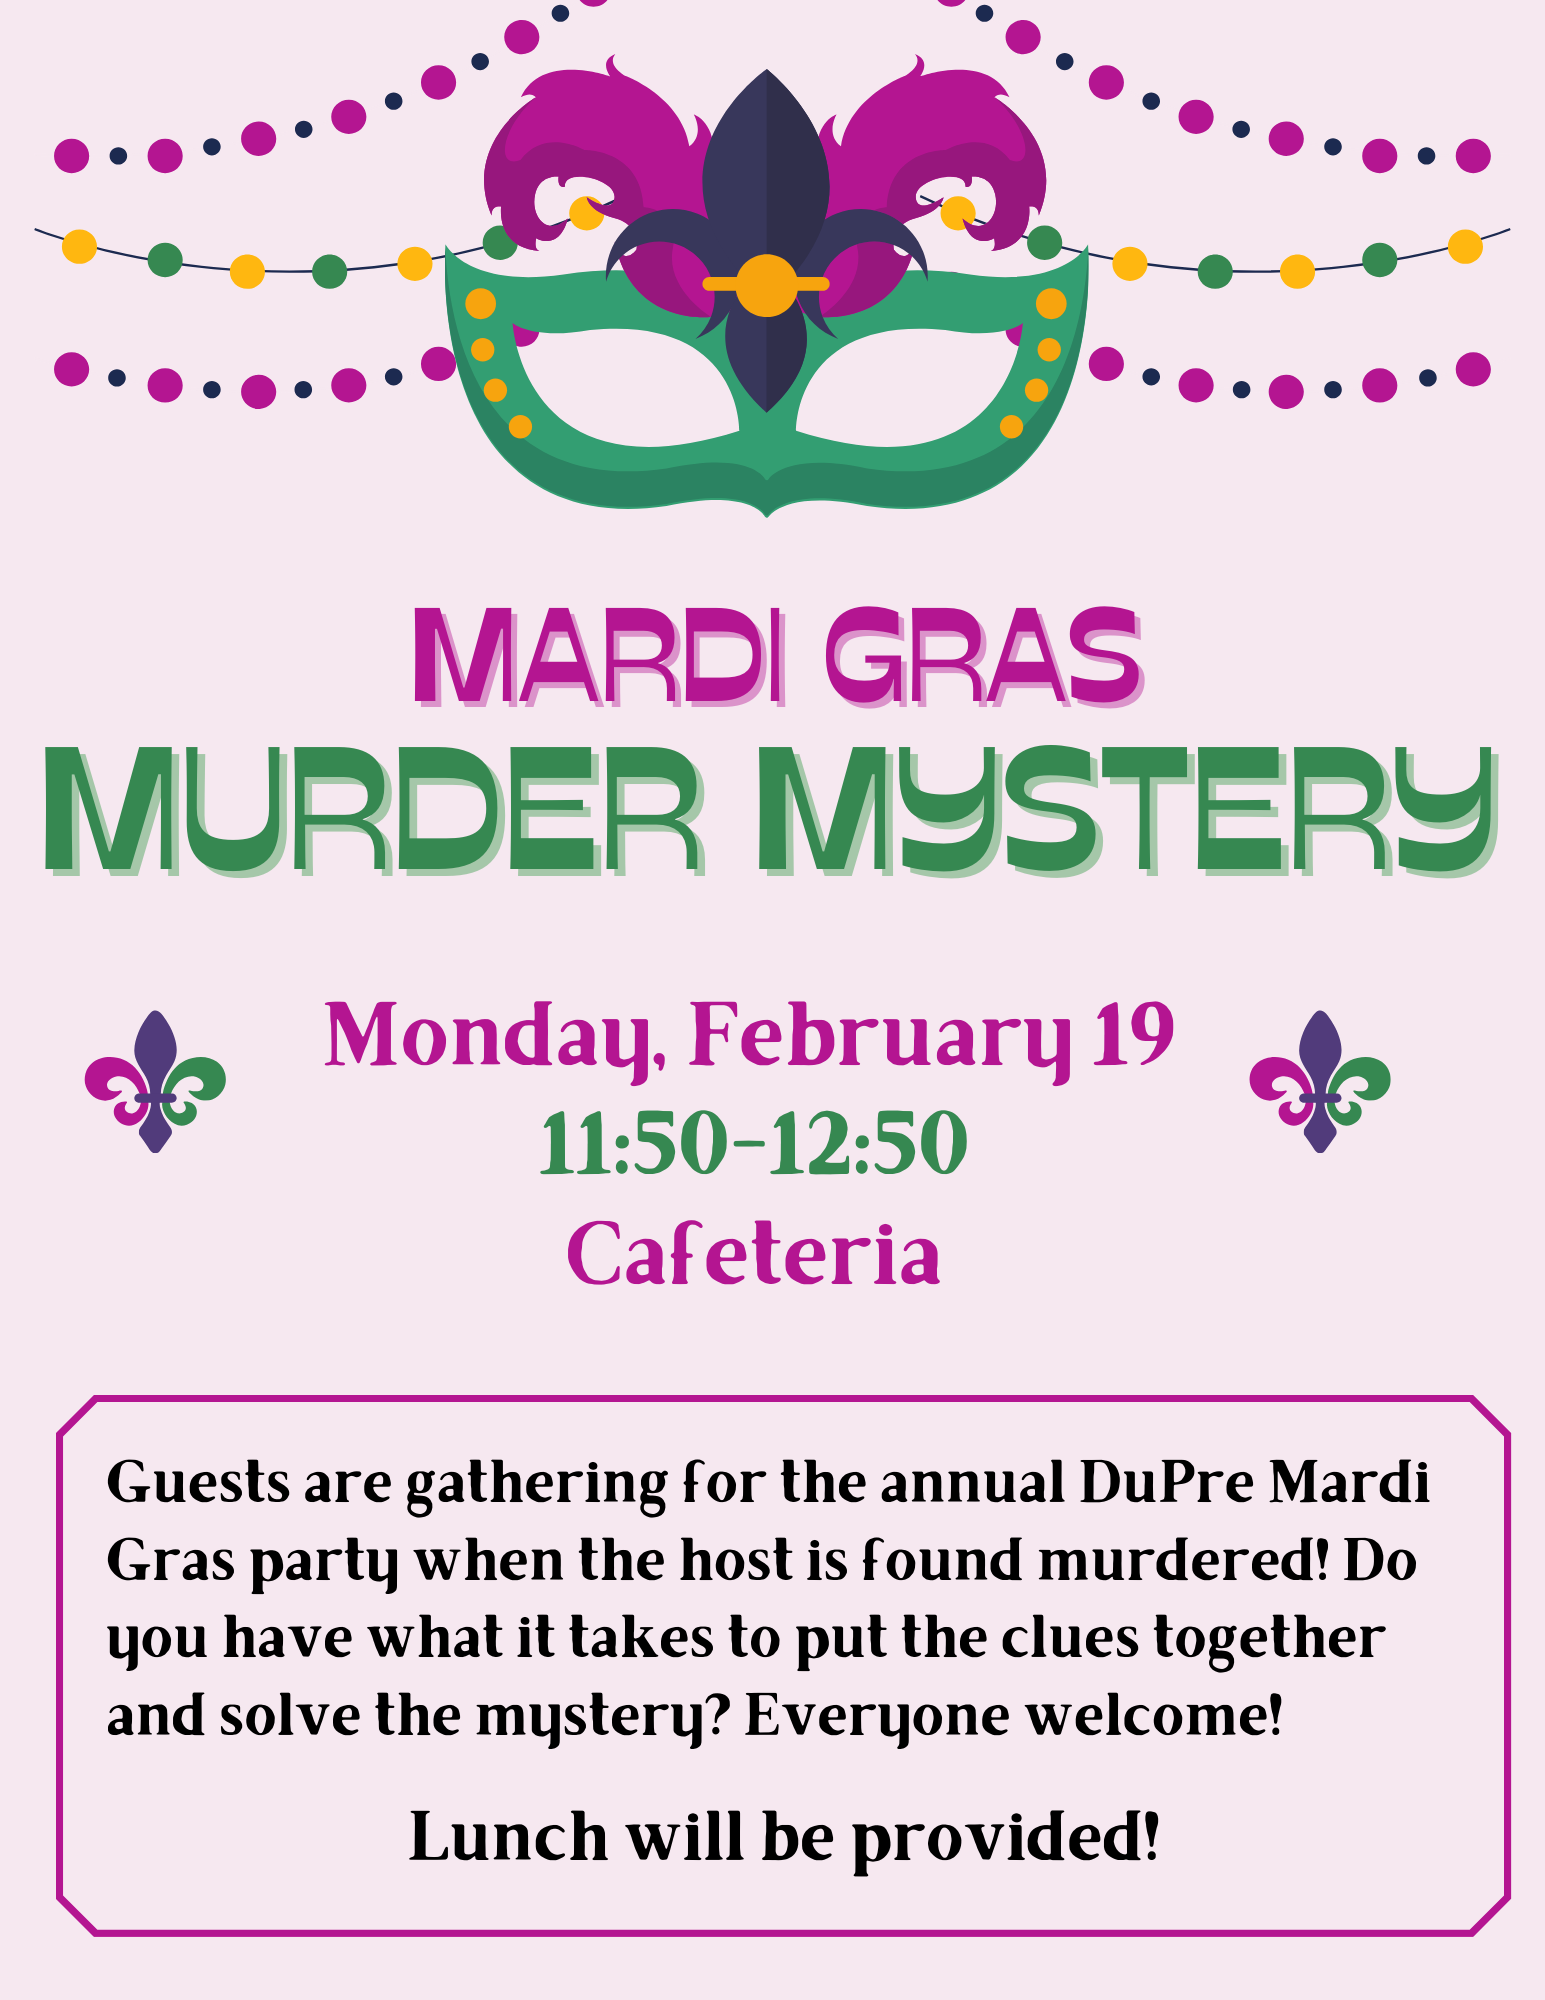 Mardi Gras Murder Mystery